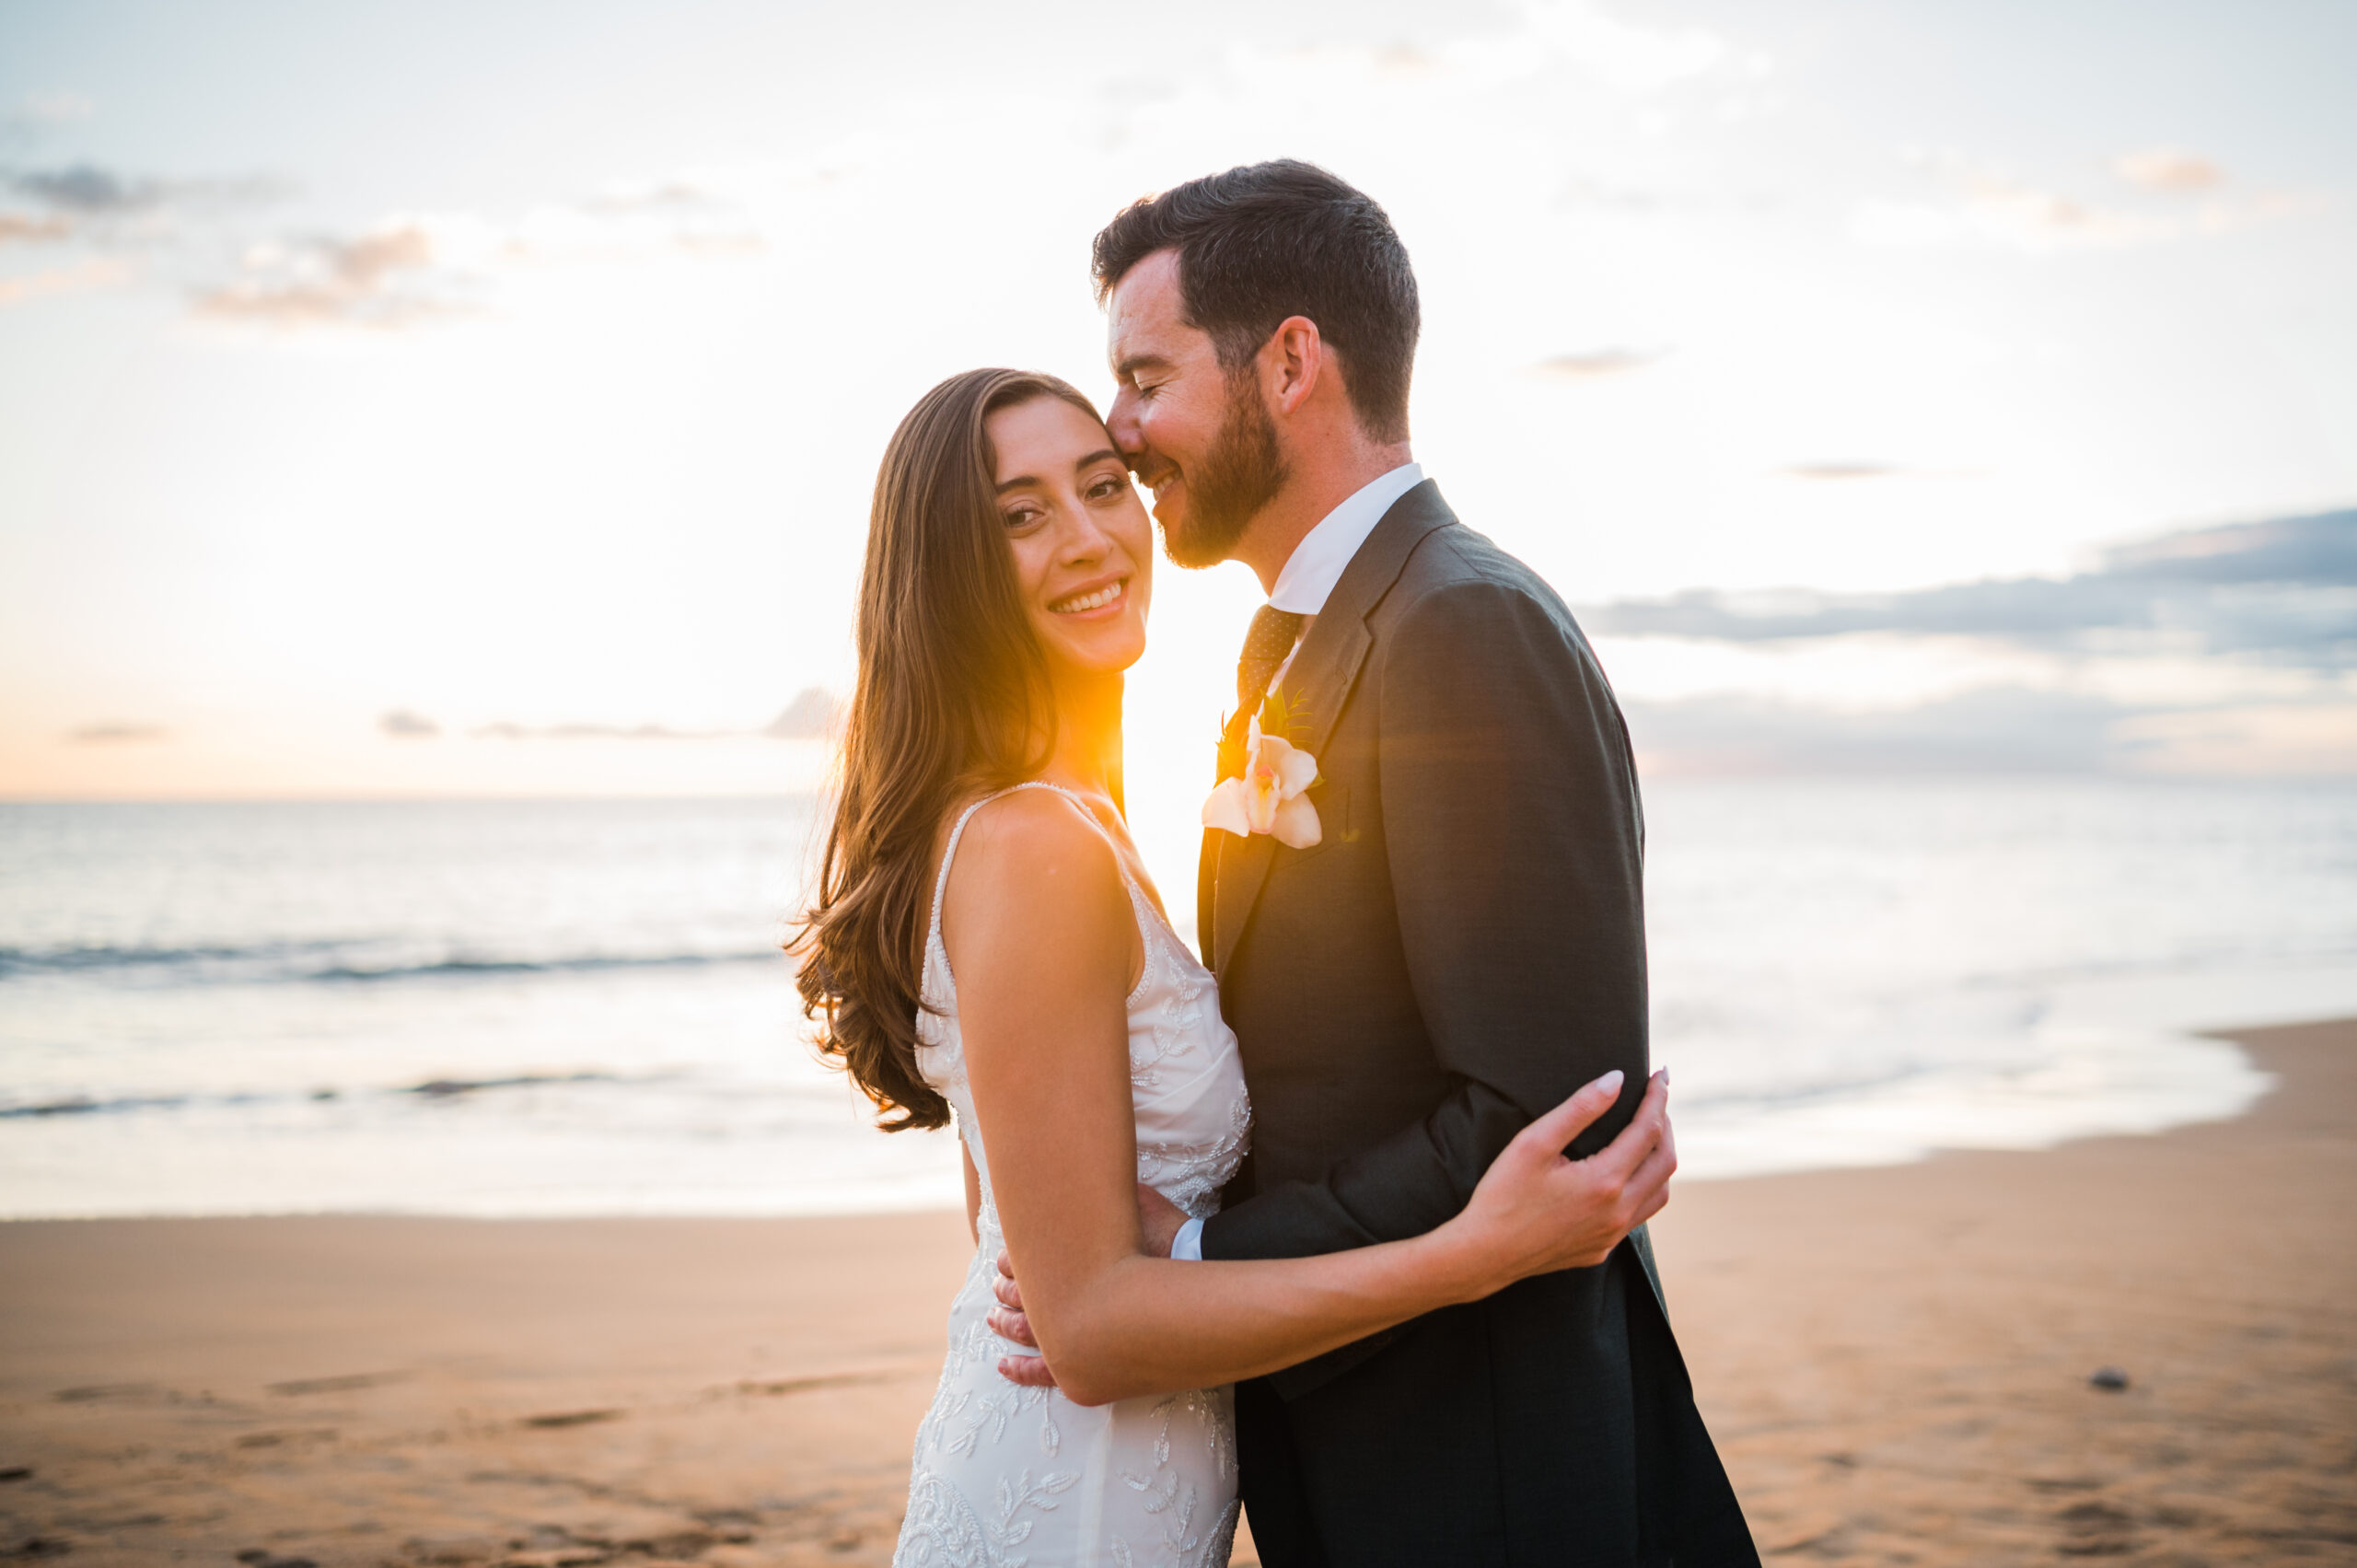 An Intimate Beach Wedding in Maui